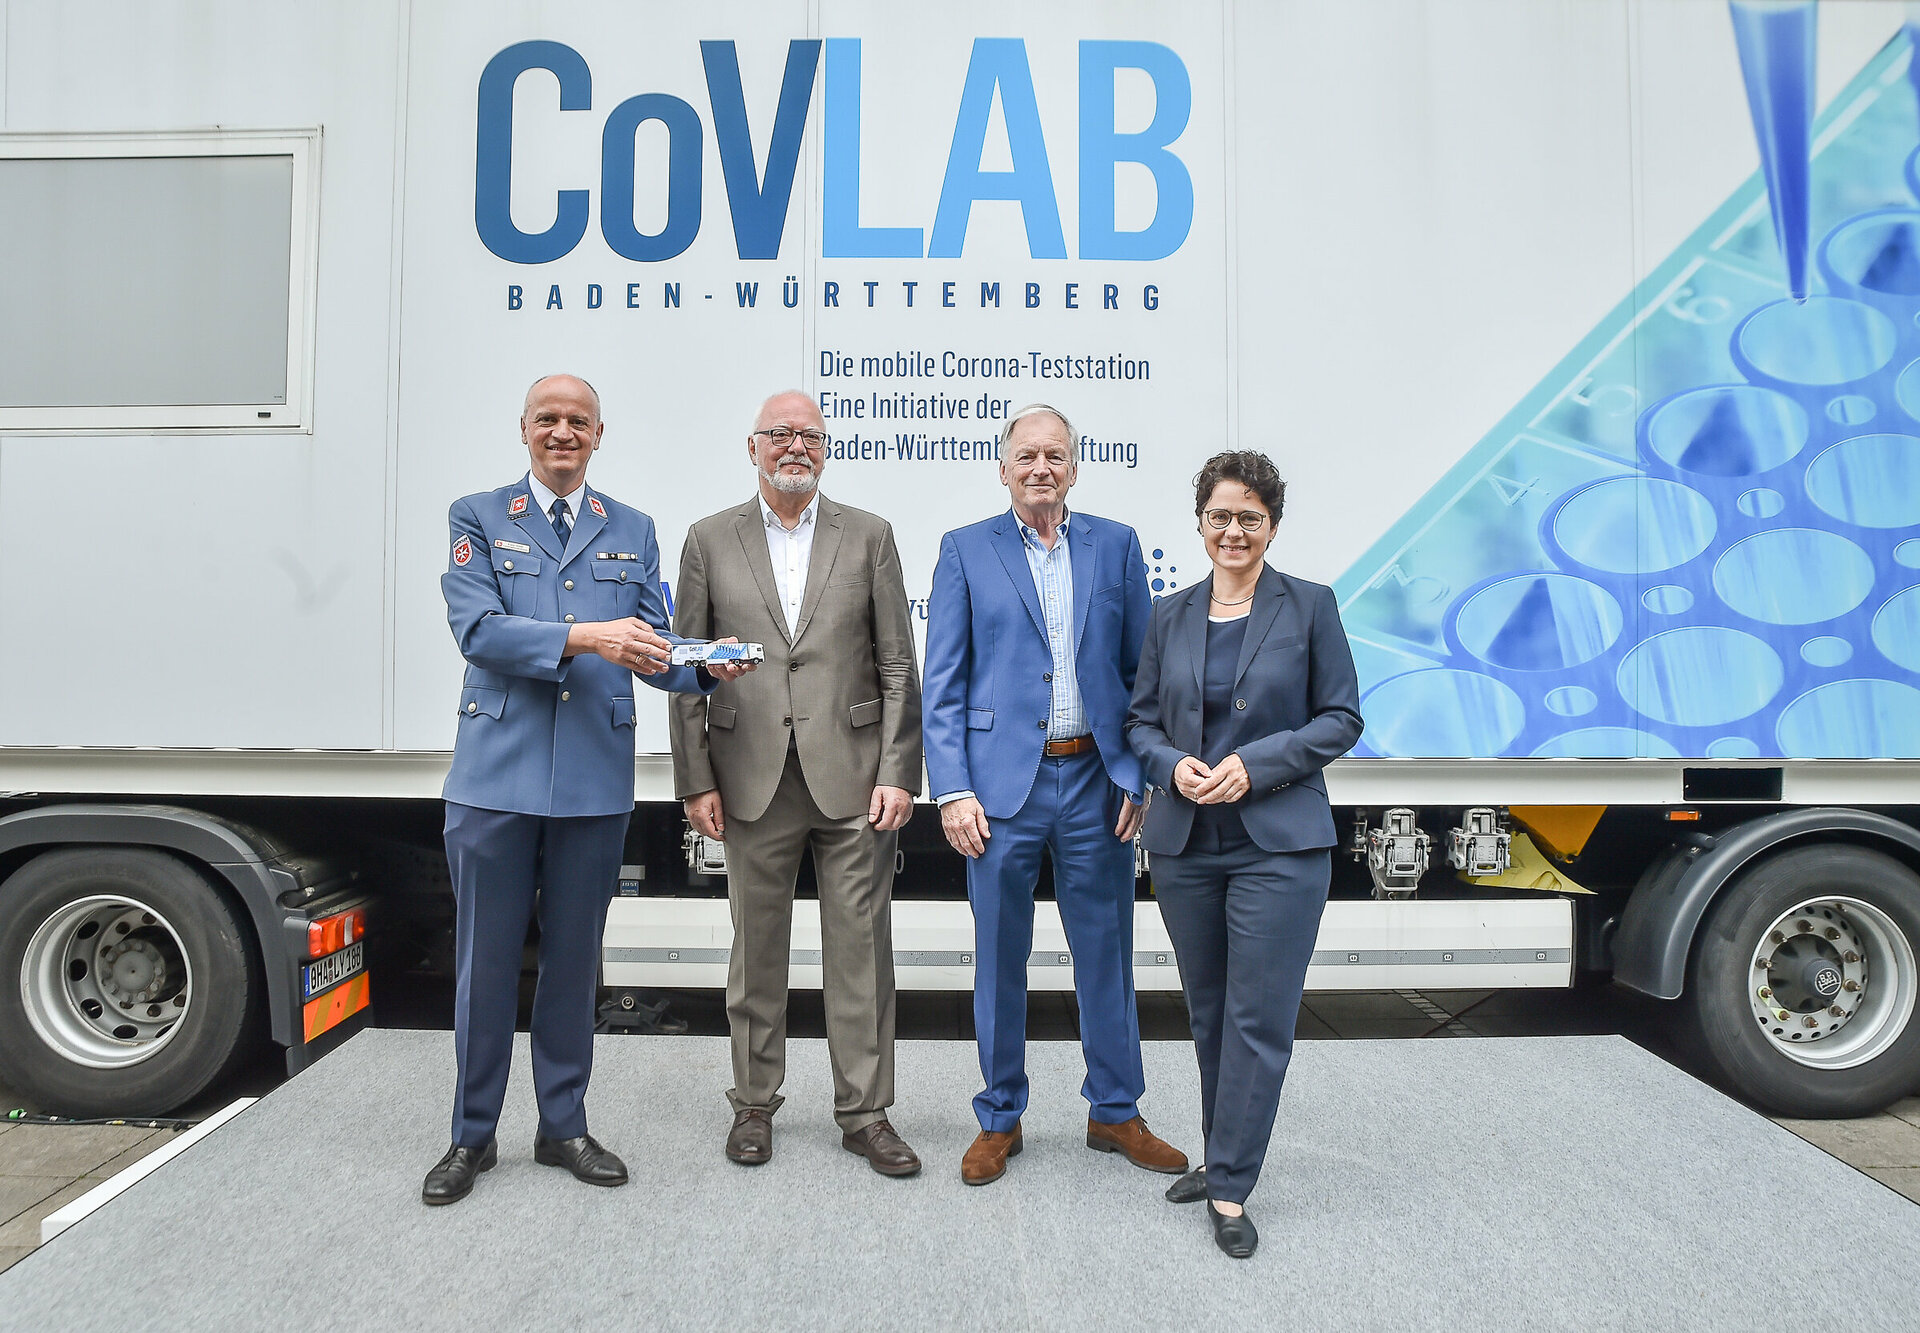 Klaus Weber, Prof. Dr. med. Michael Neumaier, Christoph Dahl und Marion Gentges stehen vor dem CovLAB. Klaus Weber hält ein Modell des CovLAB-Trucks in der Hand.